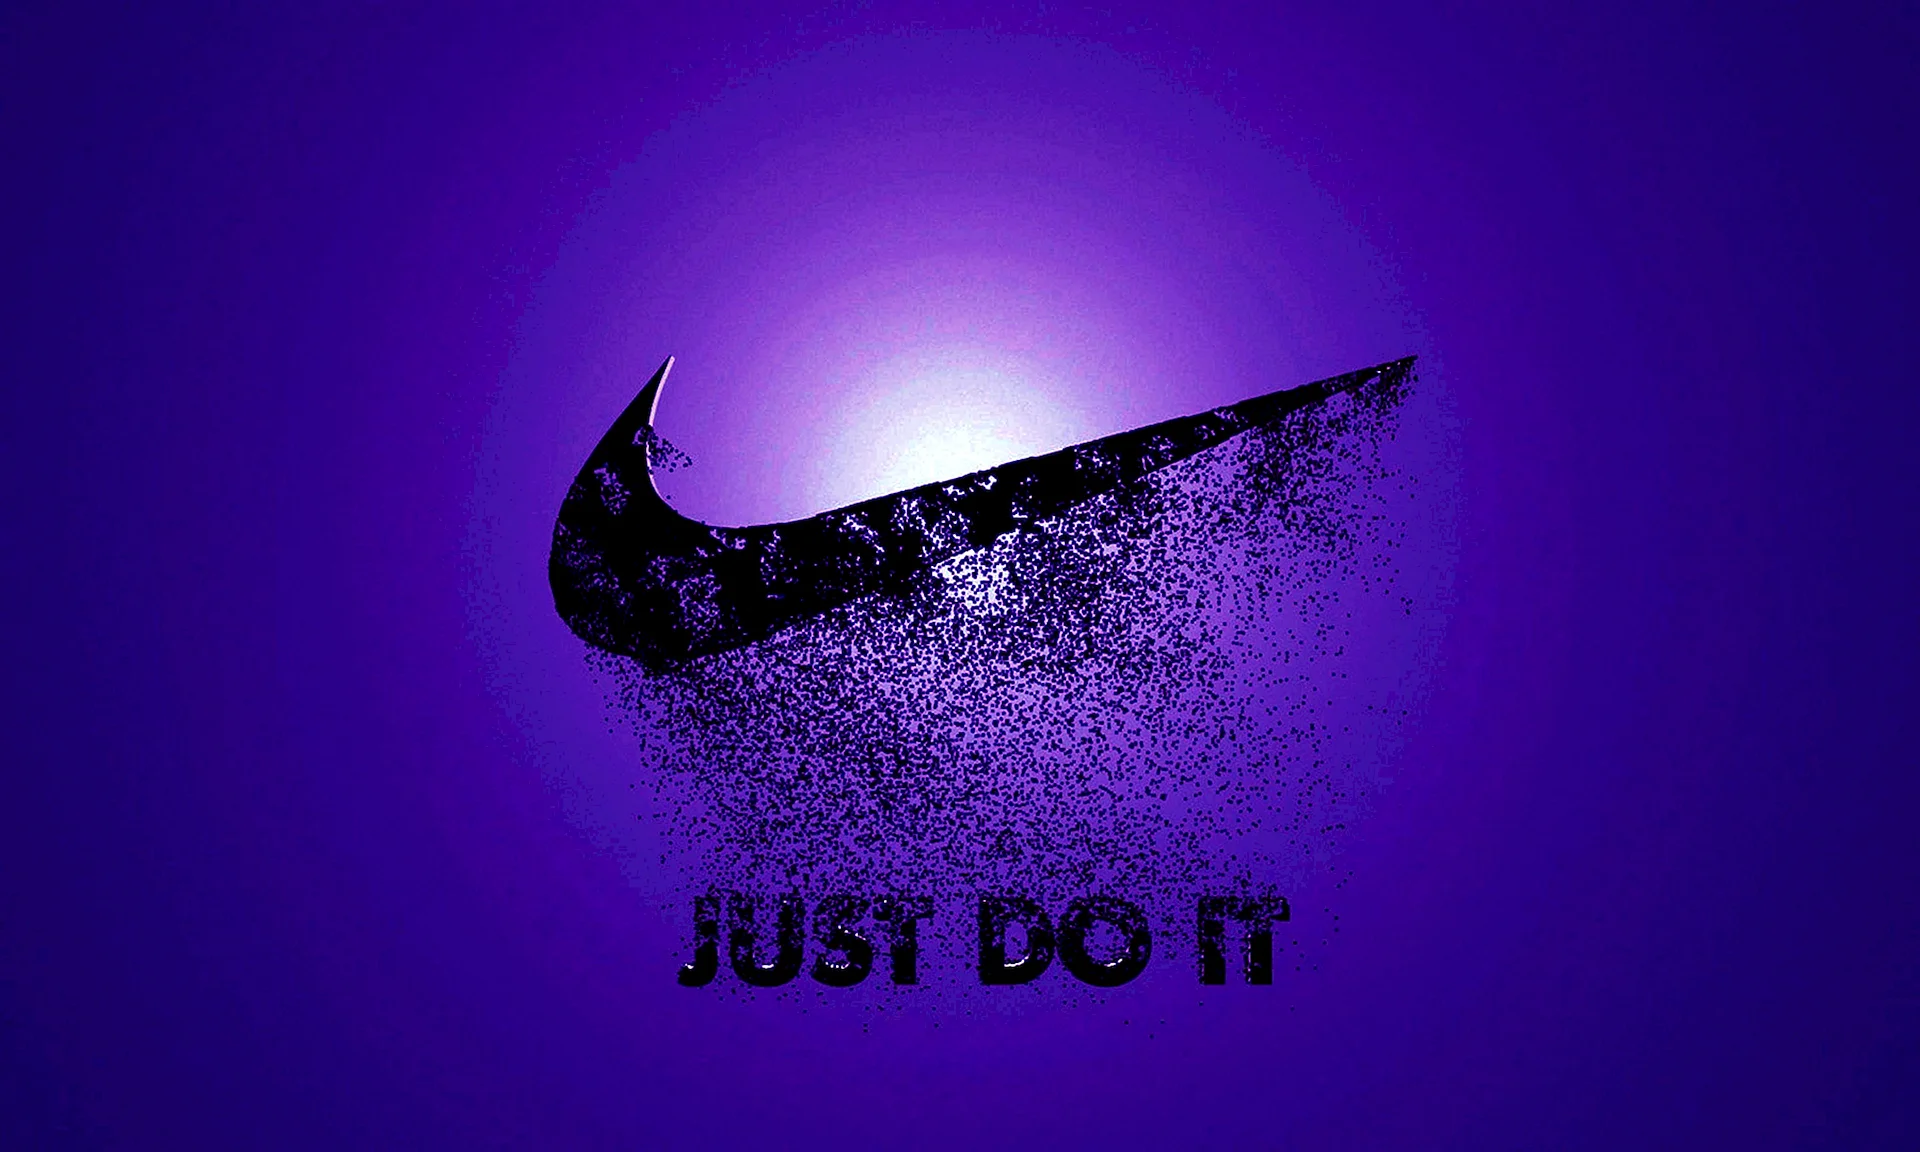 Nike Just Do It Wallpaper